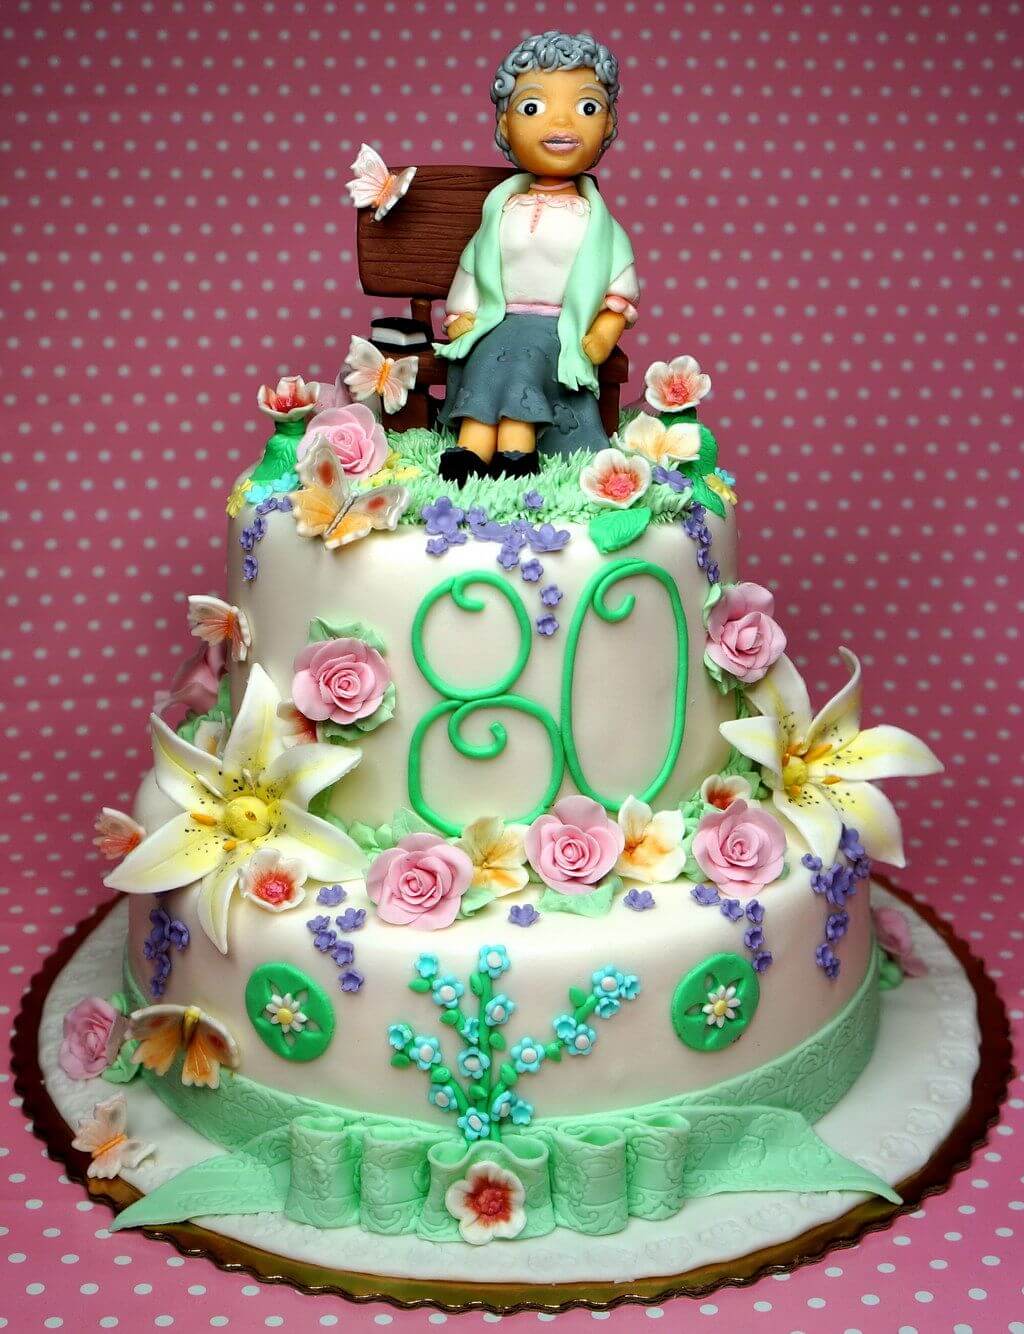 Happy Birthday Green Cake for Grandma